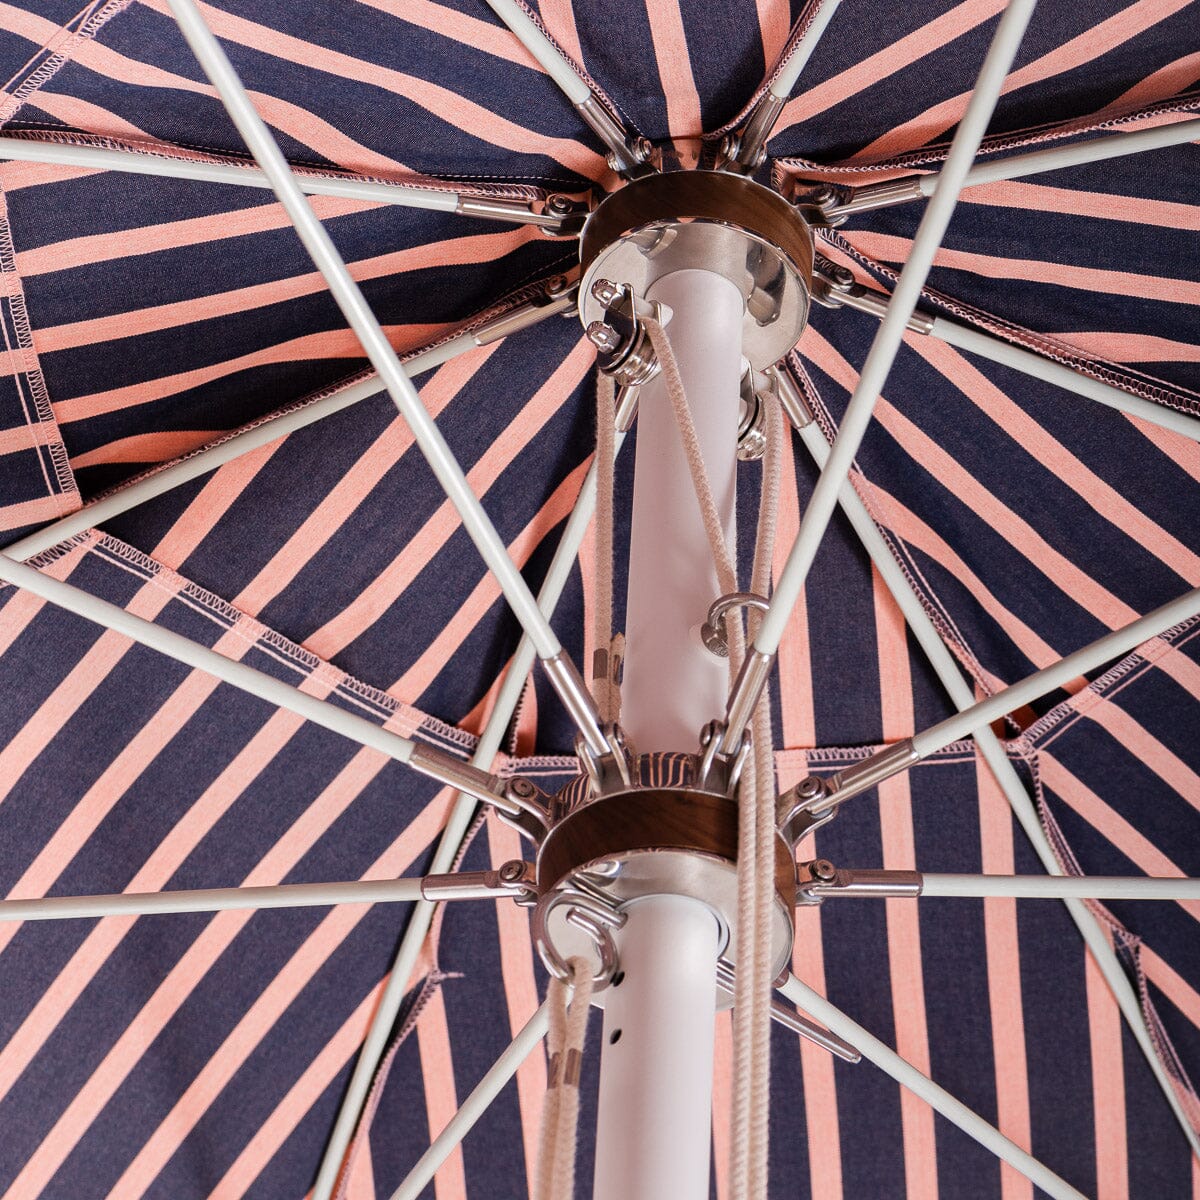 The Patio Umbrella - Monaco Navy And Pink Stripe Patio Umbrella Business & Pleasure Co 